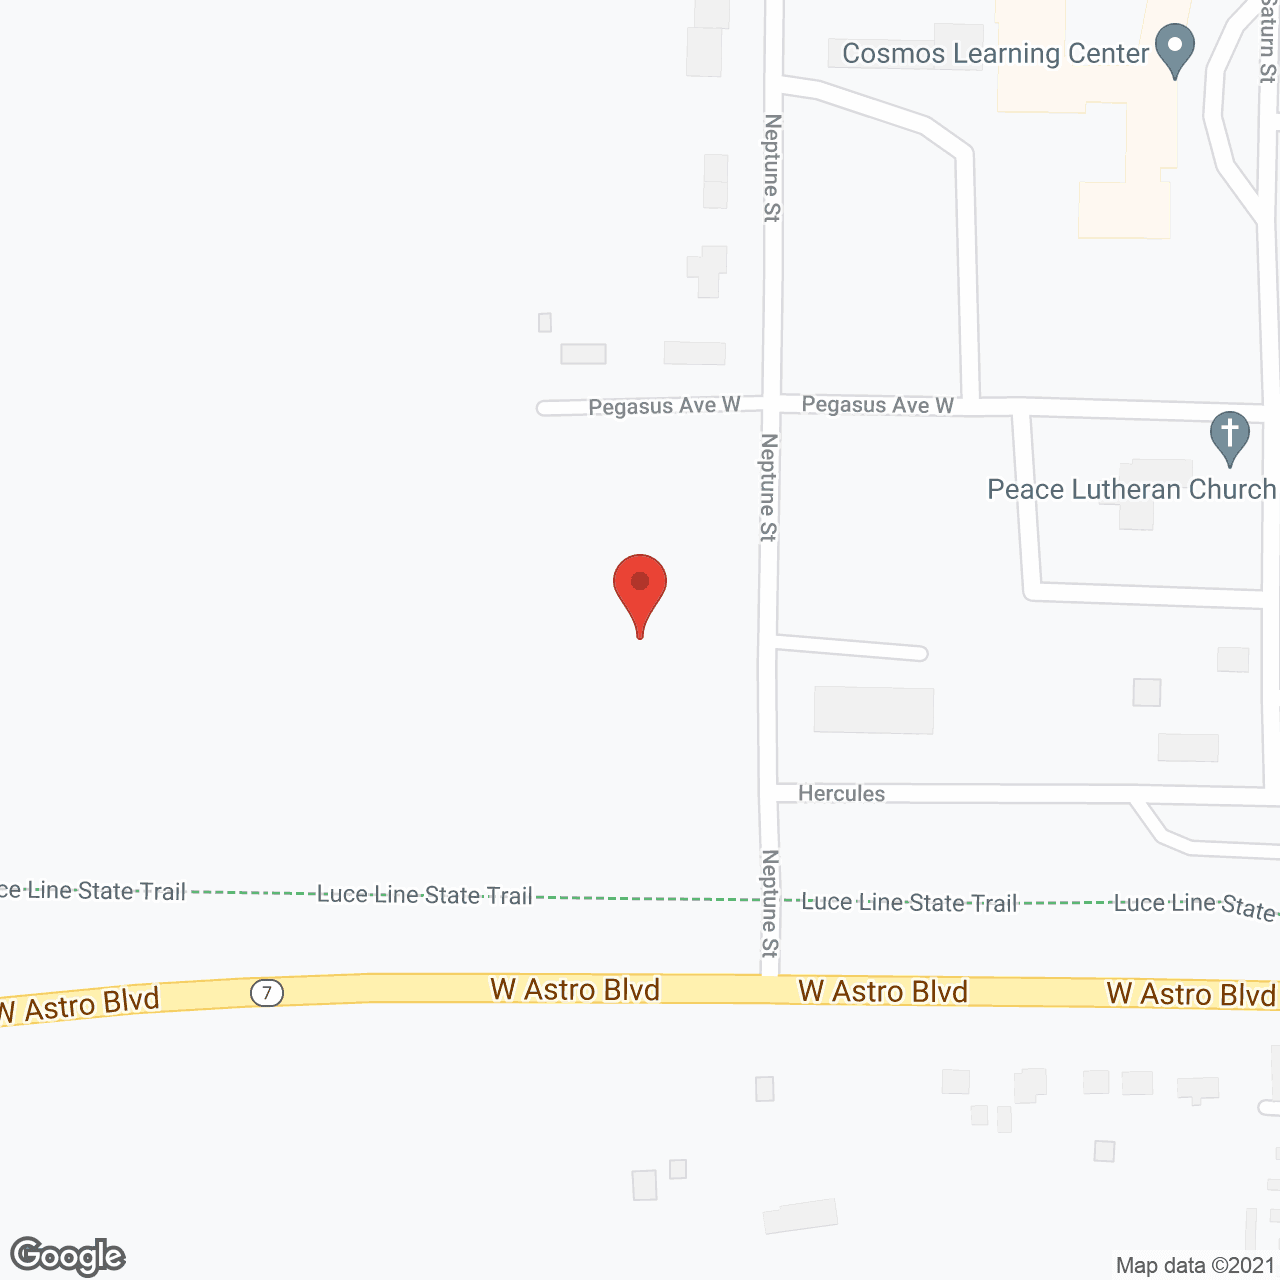 Cedar Crest of Cosmos in google map